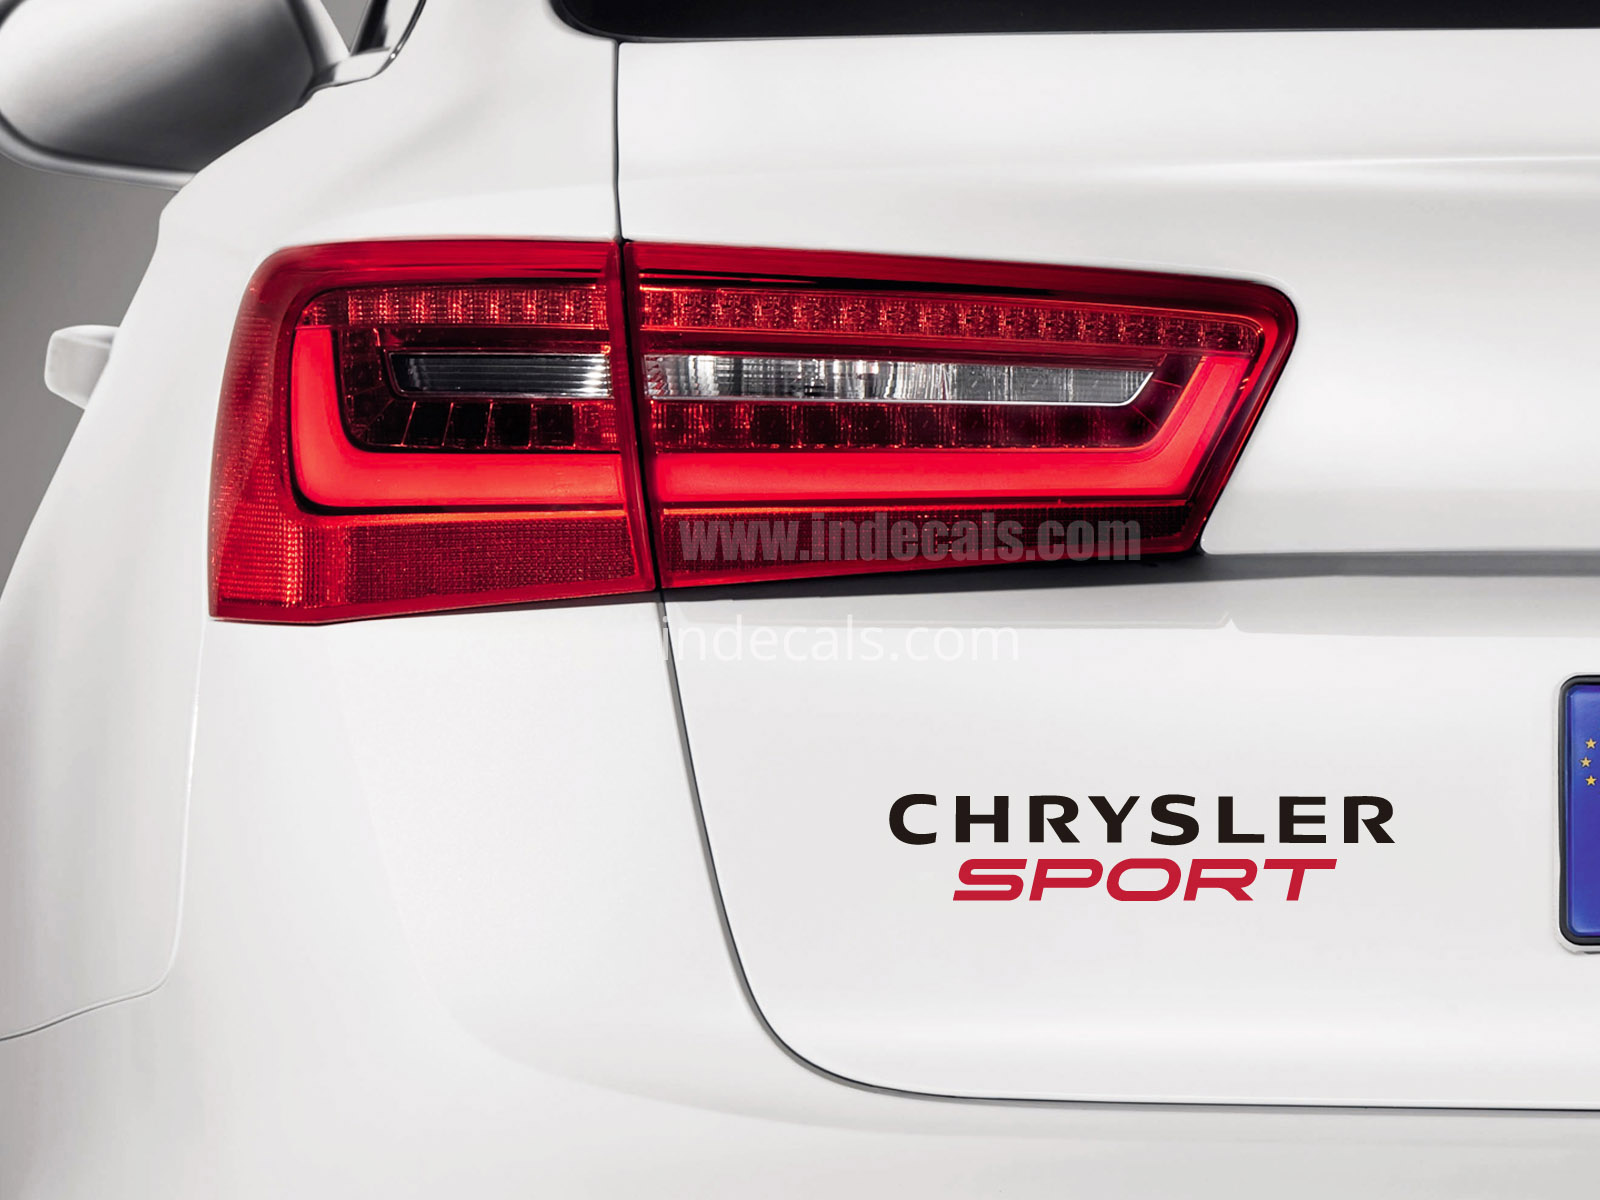 1 x Chrysler Sports Sticker for Trunk - Black & Red